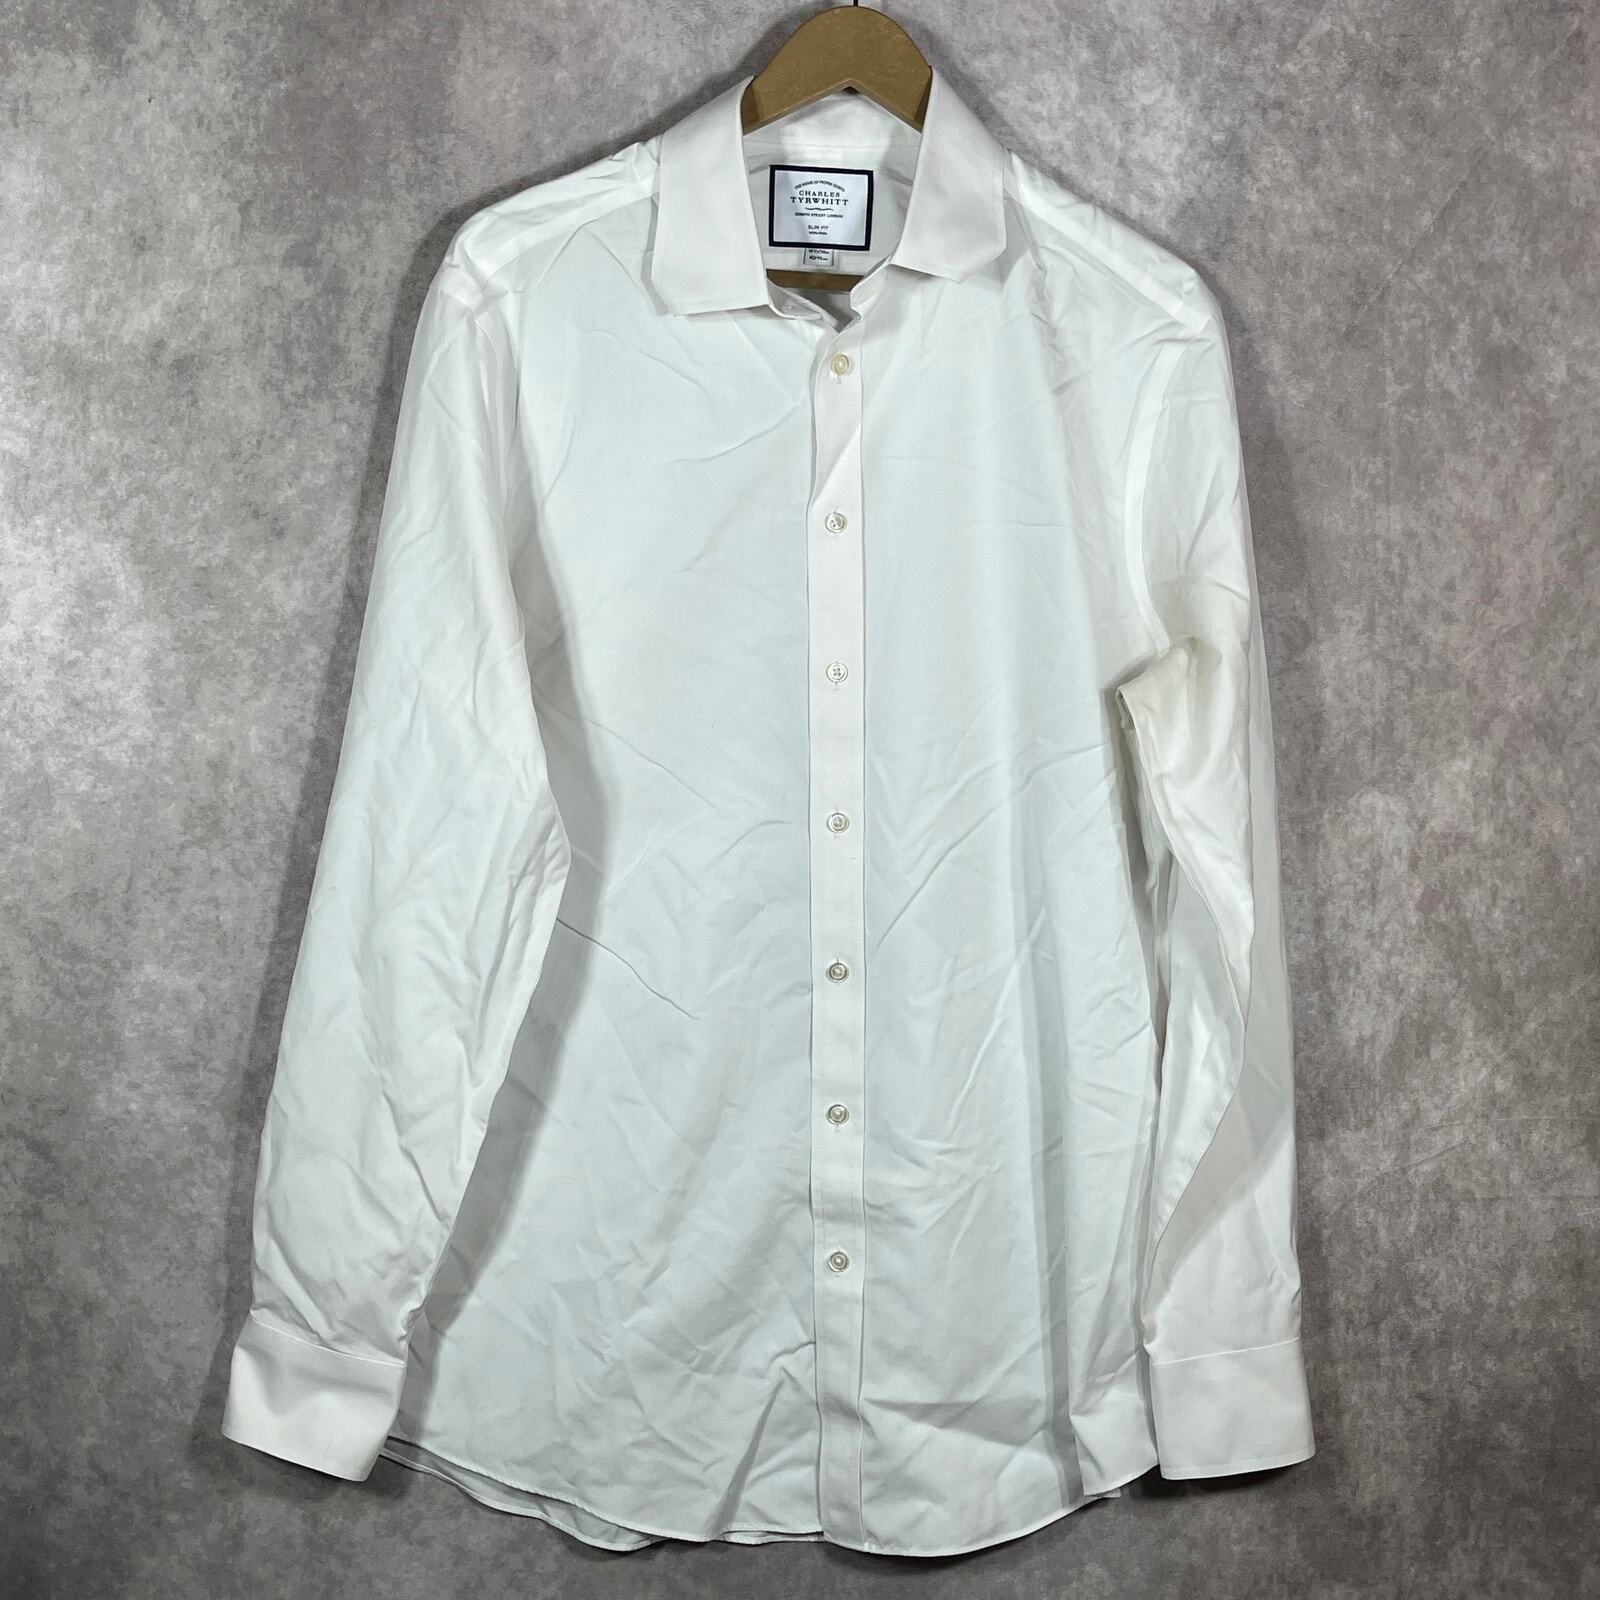 Charles Tyrwhitt Dress Shirt Mens 16.5 42White Non Iron Slim Fit Button Up 